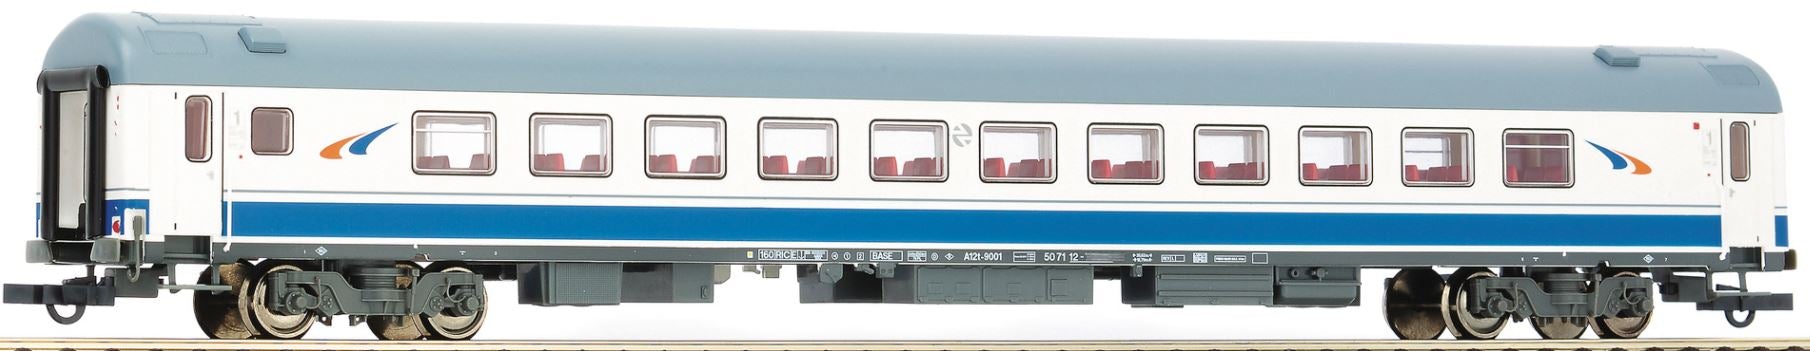 Roco 64594 H0 H0 Passenger Car 1st Class Express Train 9100, Ep V RENFE